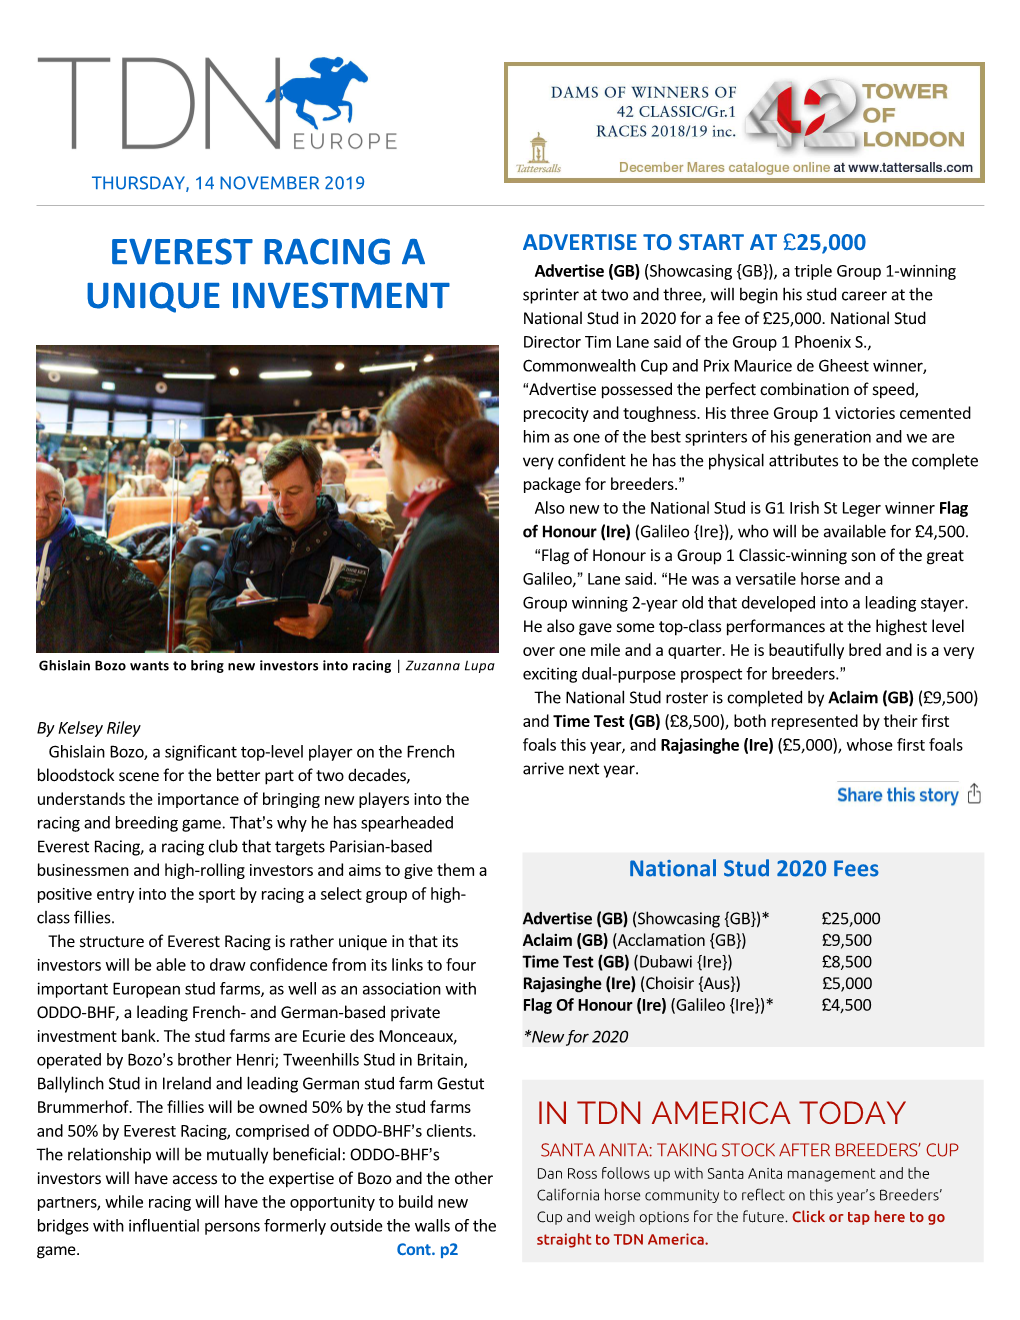 Everest Racing a Unique Investment Cont